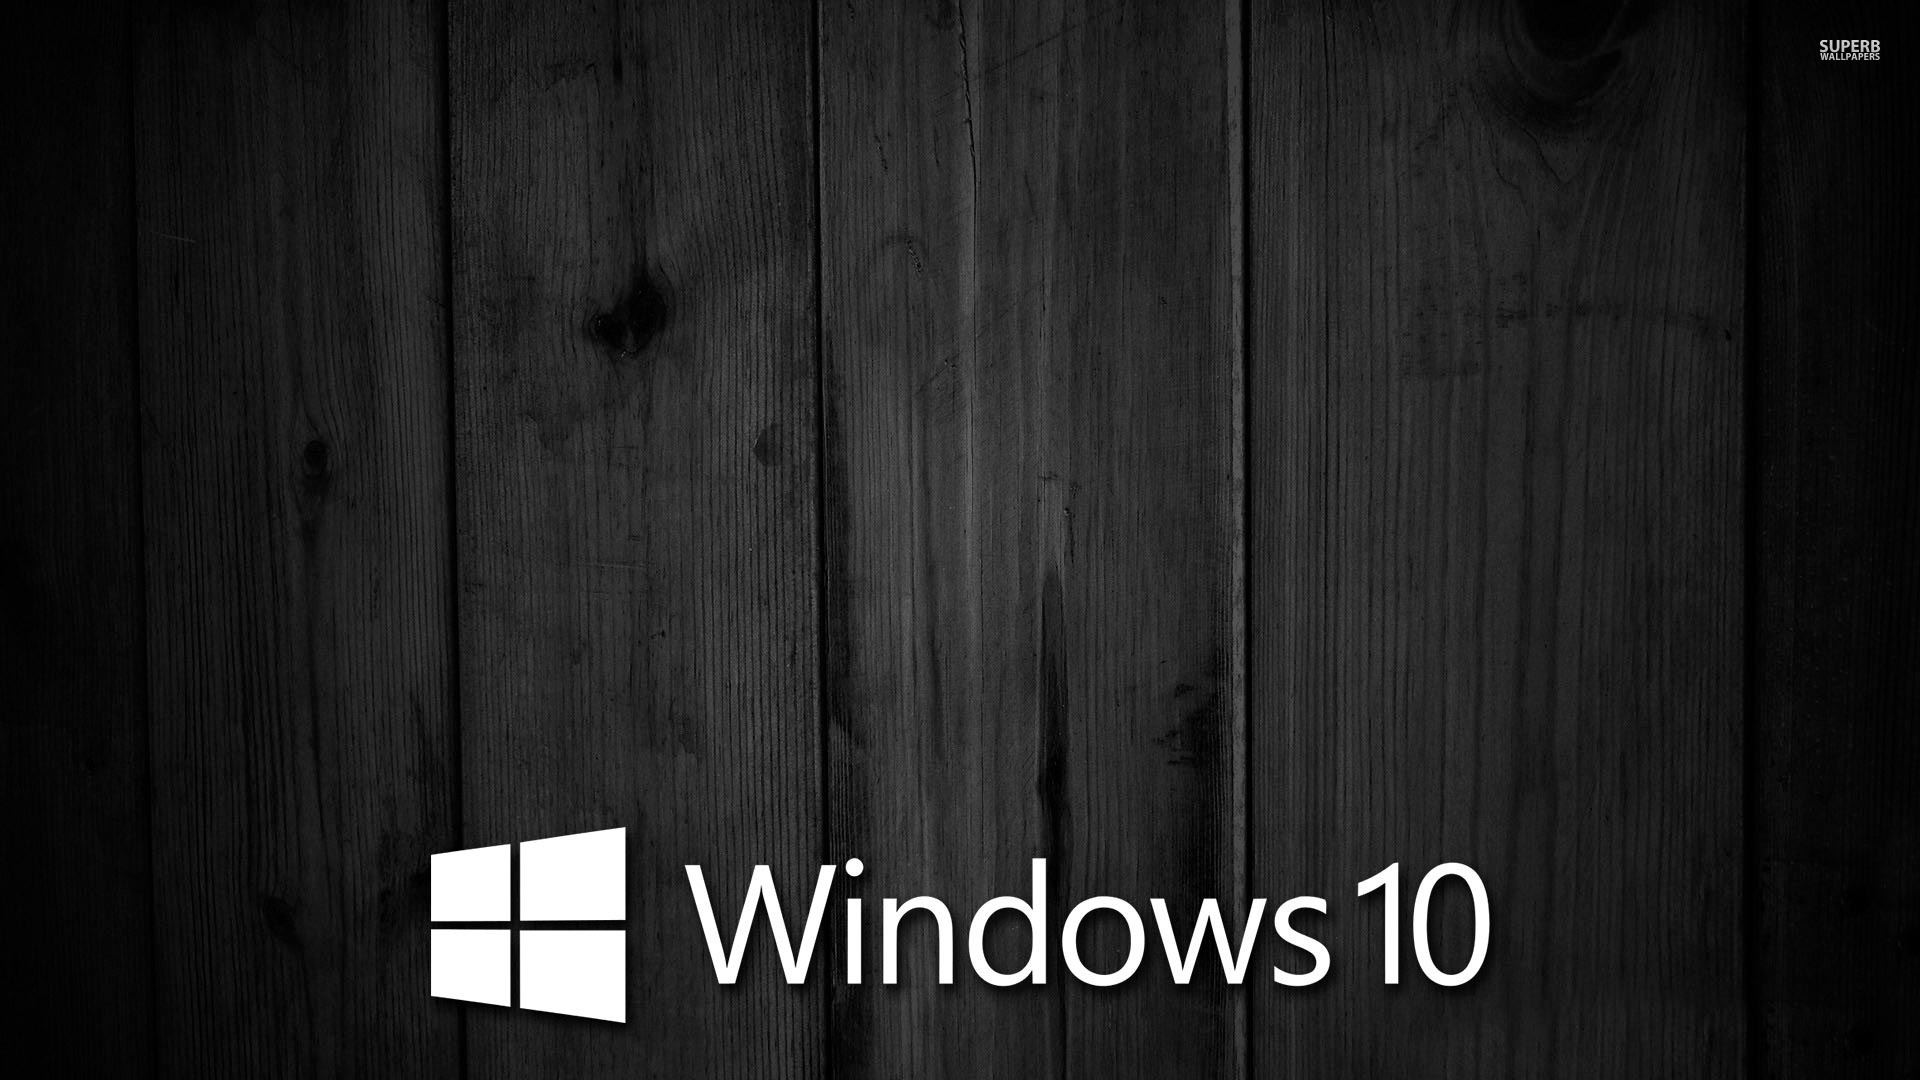 [44+] Great Windows 10 Wallpapers on WallpaperSafari